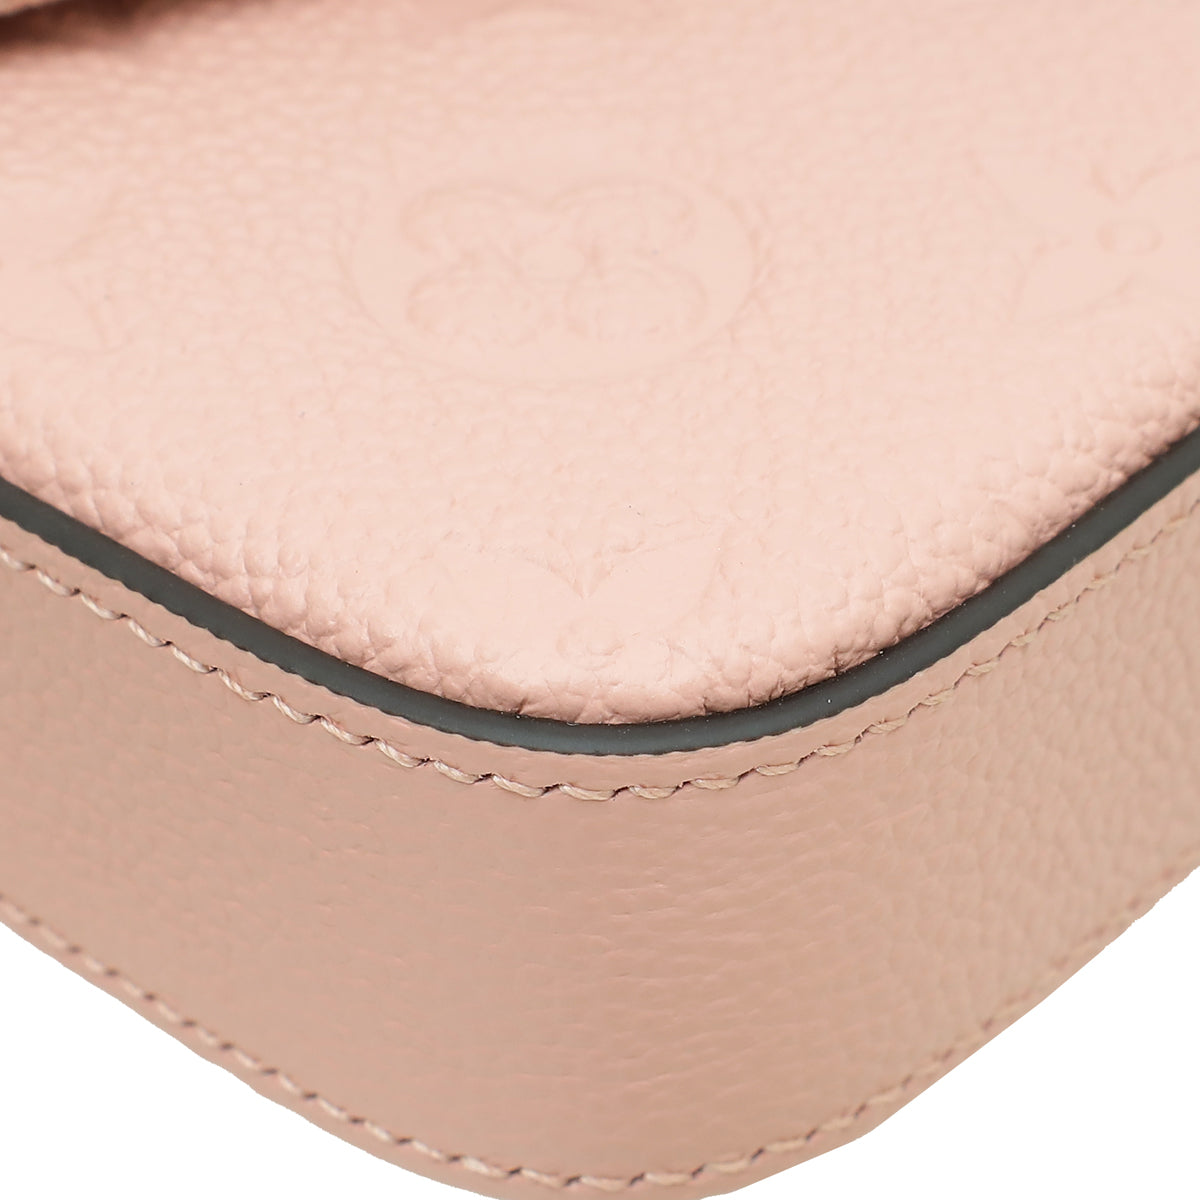 Louis Vuitton Rose Poudre Monogram Empreinte Felicie Pochette Bag